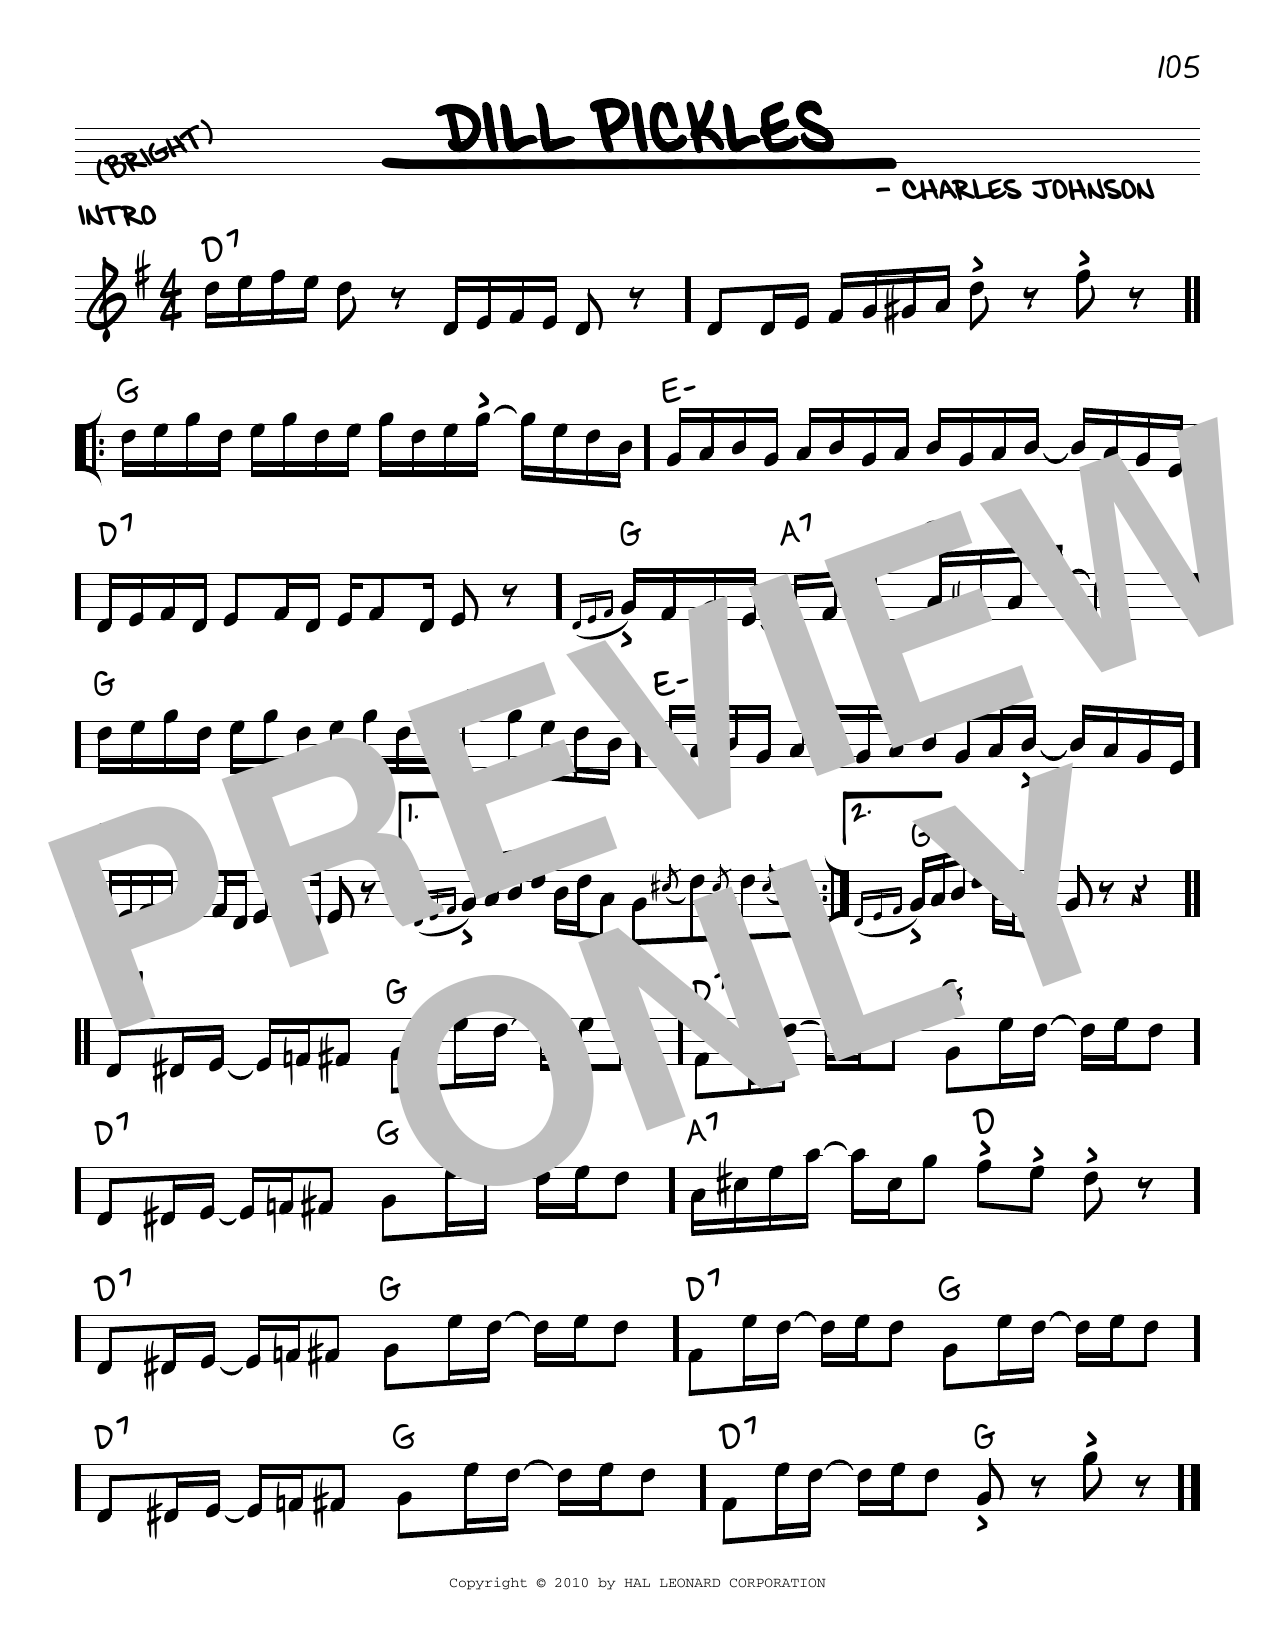 Charles Johnson Dill Pickles (arr. Robert Rawlins) Sheet Music Notes & Chords for Real Book – Melody, Lyrics & Chords - Download or Print PDF